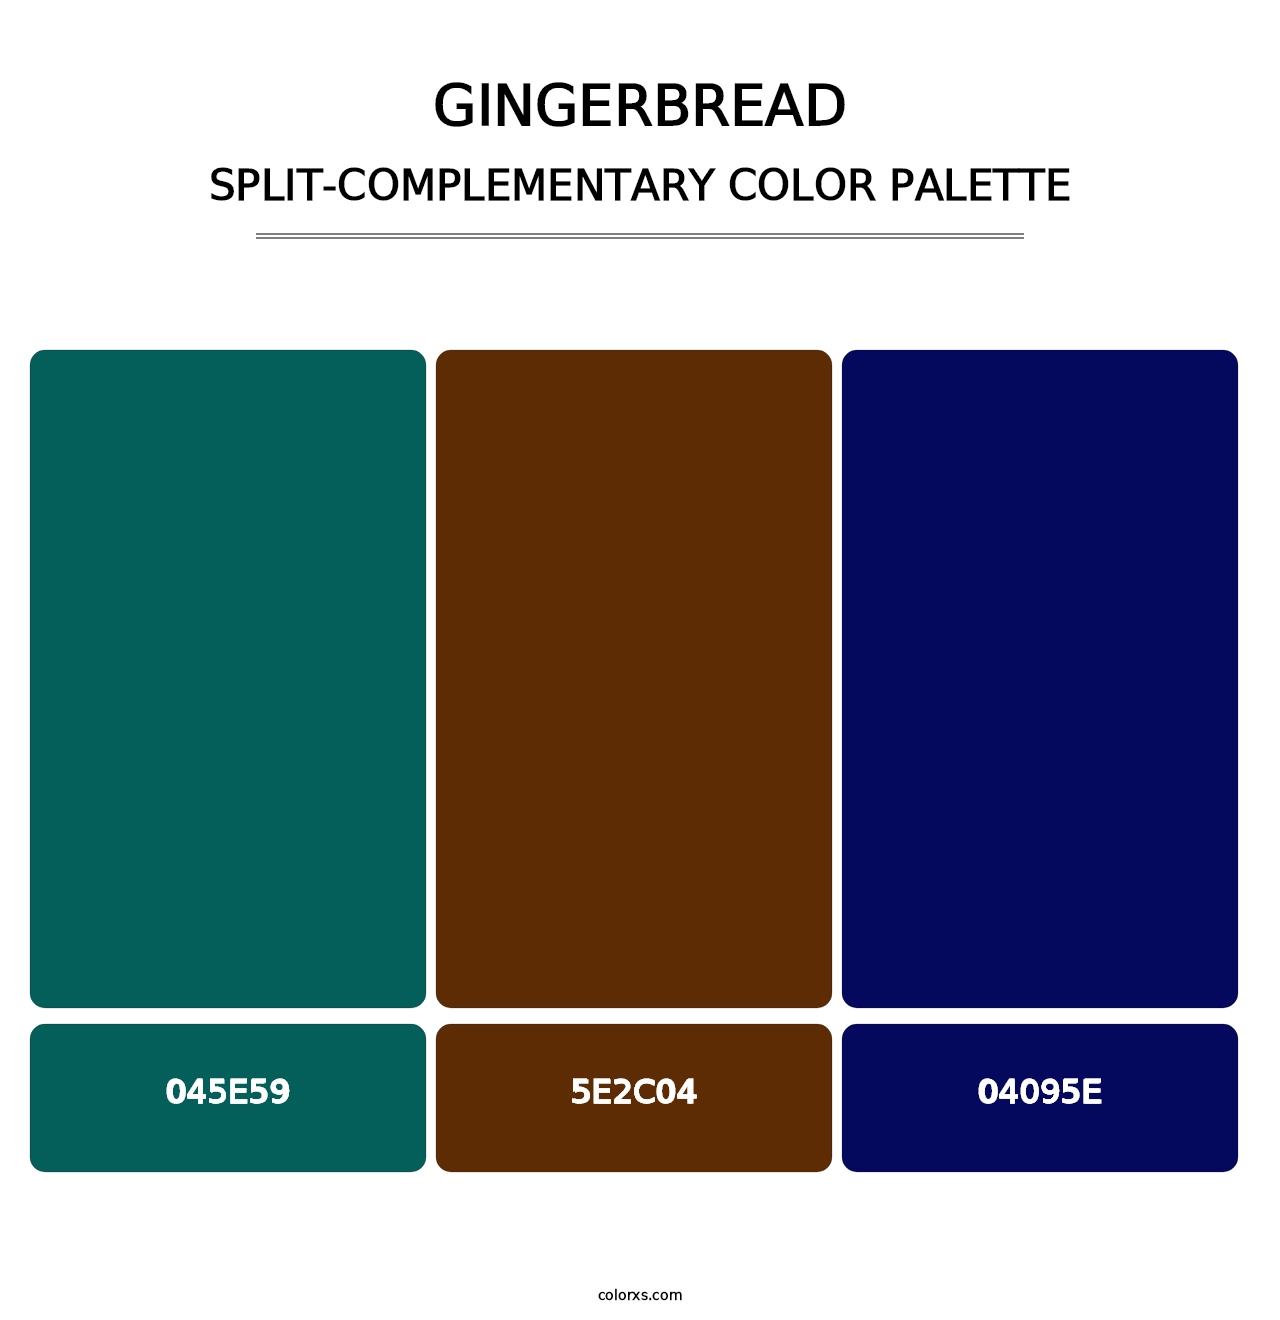 Gingerbread - Split-Complementary Color Palette